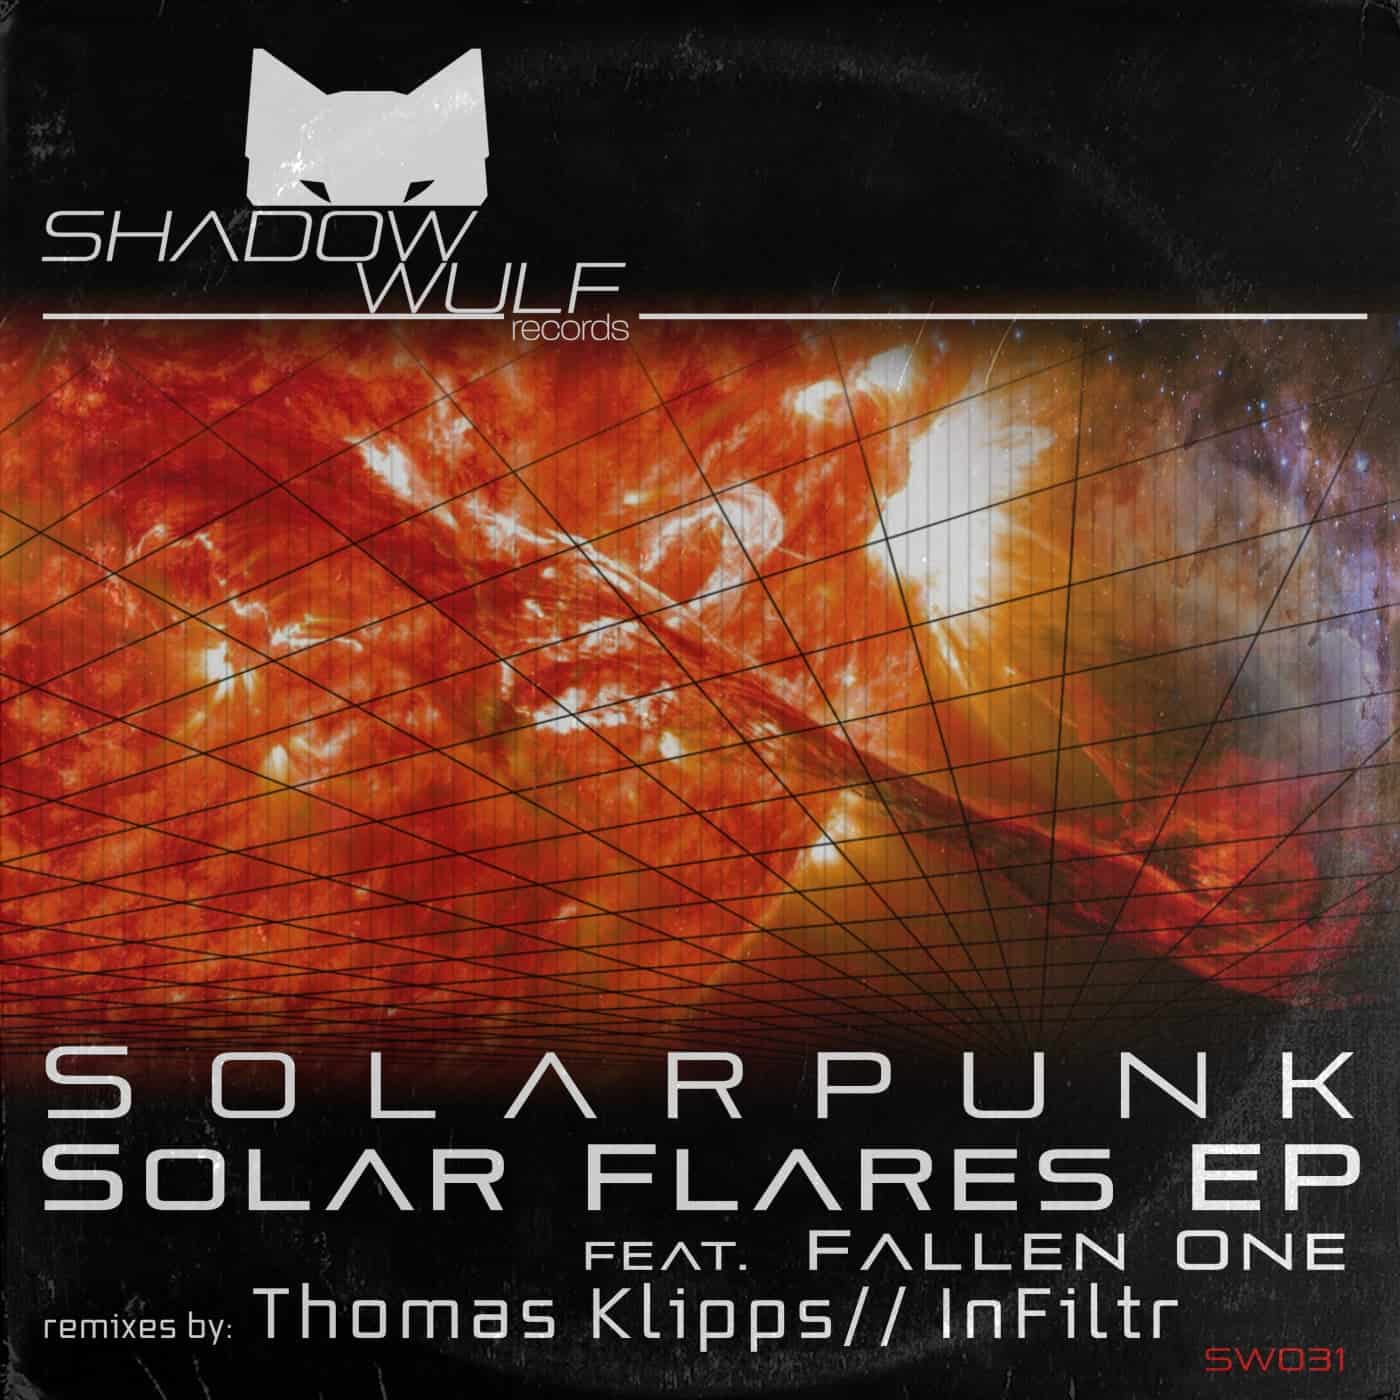 Download Solarpunk, Fallen one - Solarpunk on Electrobuzz